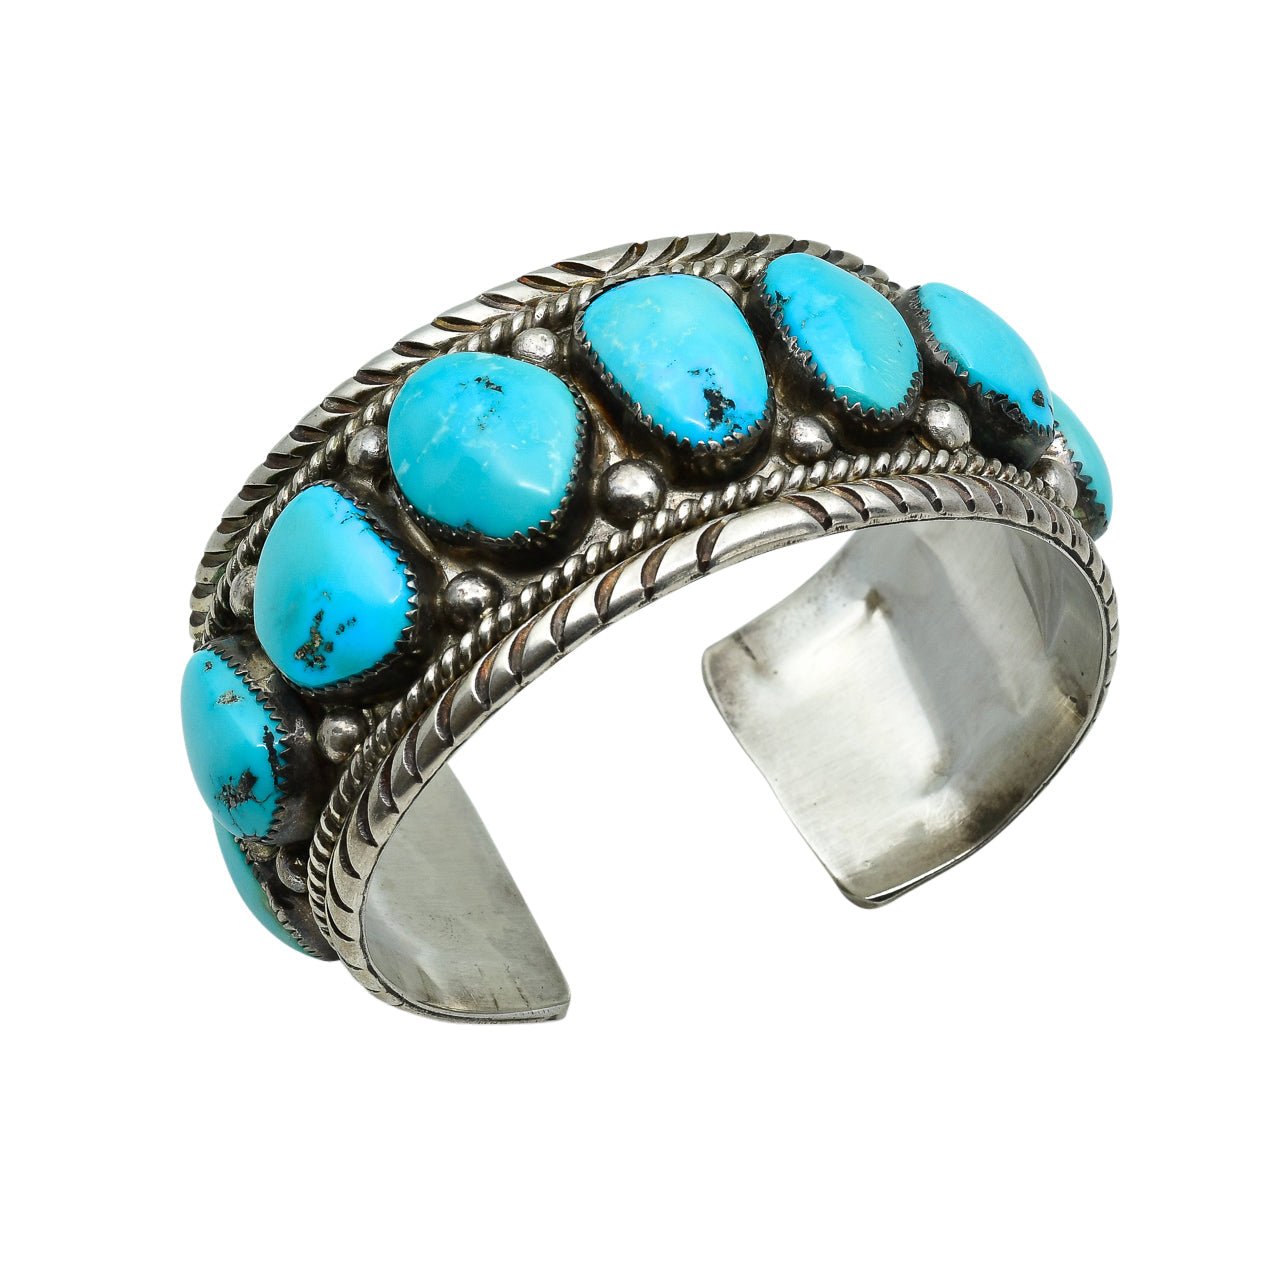 Vintage Navajo Turquoise Row Bracelet With 9 Stones - Turquoise & Tufa